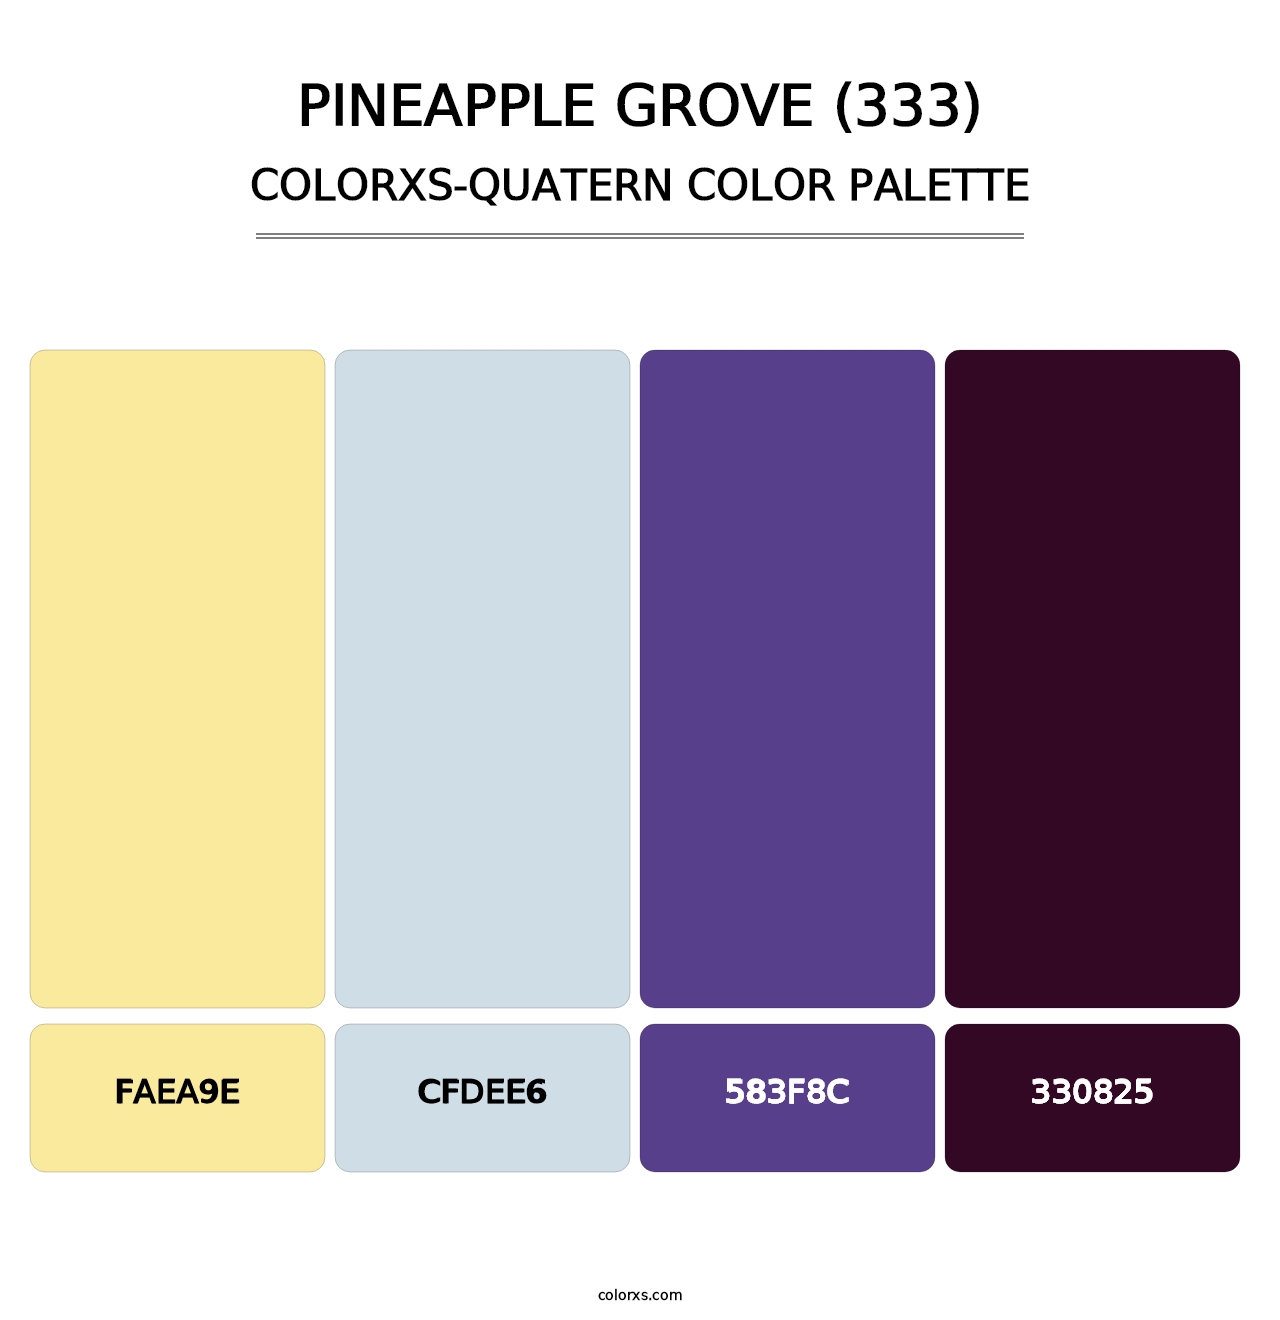 Pineapple Grove (333) - Colorxs Quatern Palette